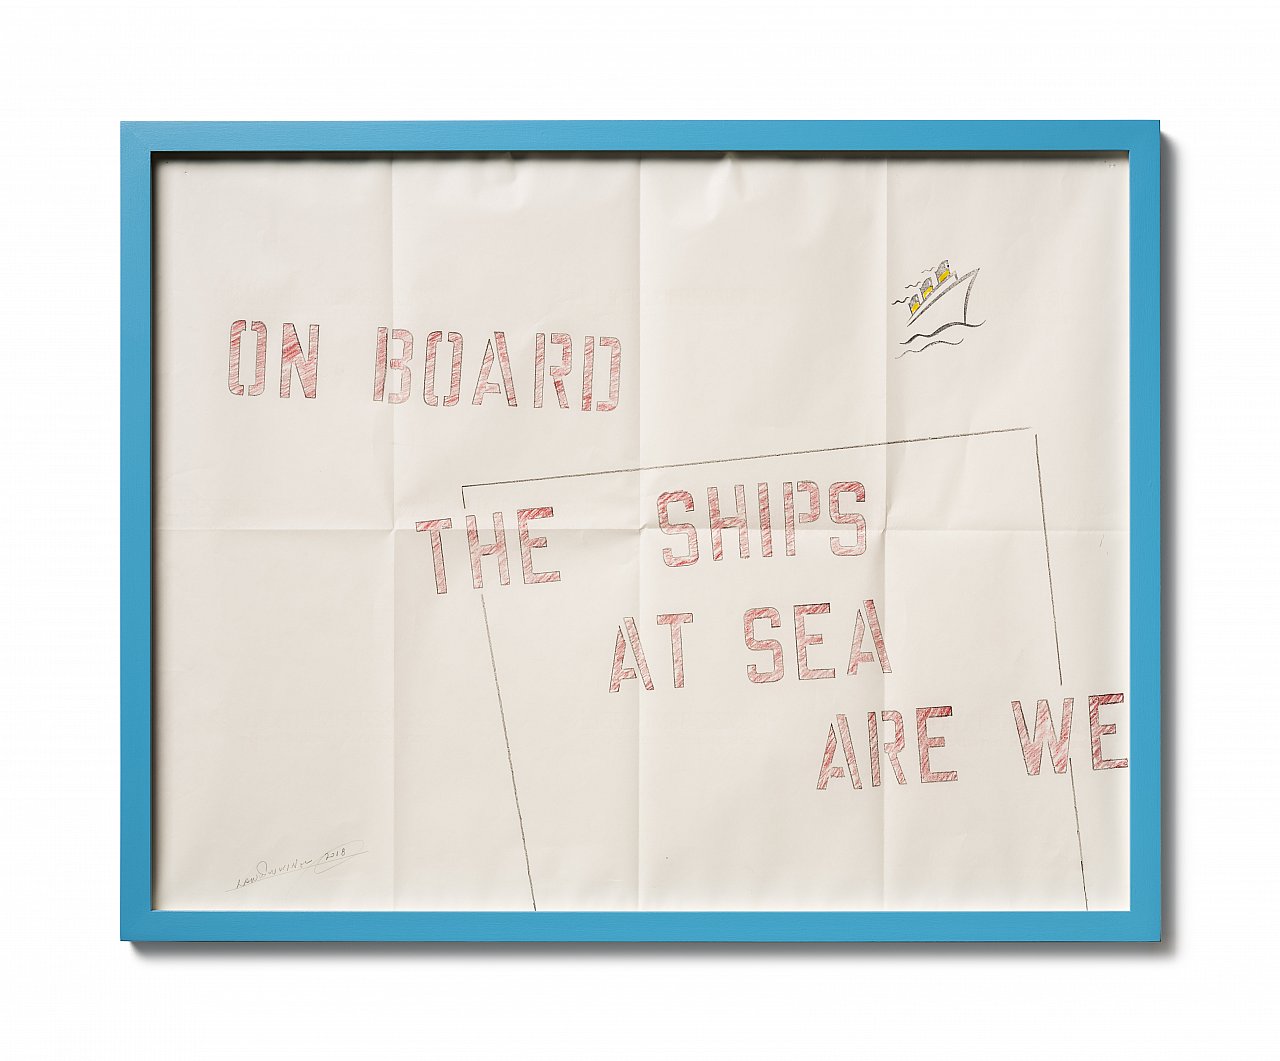 Lawrence Weiner – ON BOARD THE SHIPS AT SEA ARE WE, 2018, Faber Castell Bleistift, Faber Castell Tusche auf gefaltetem Archivpapier, 54 x 69 cm 